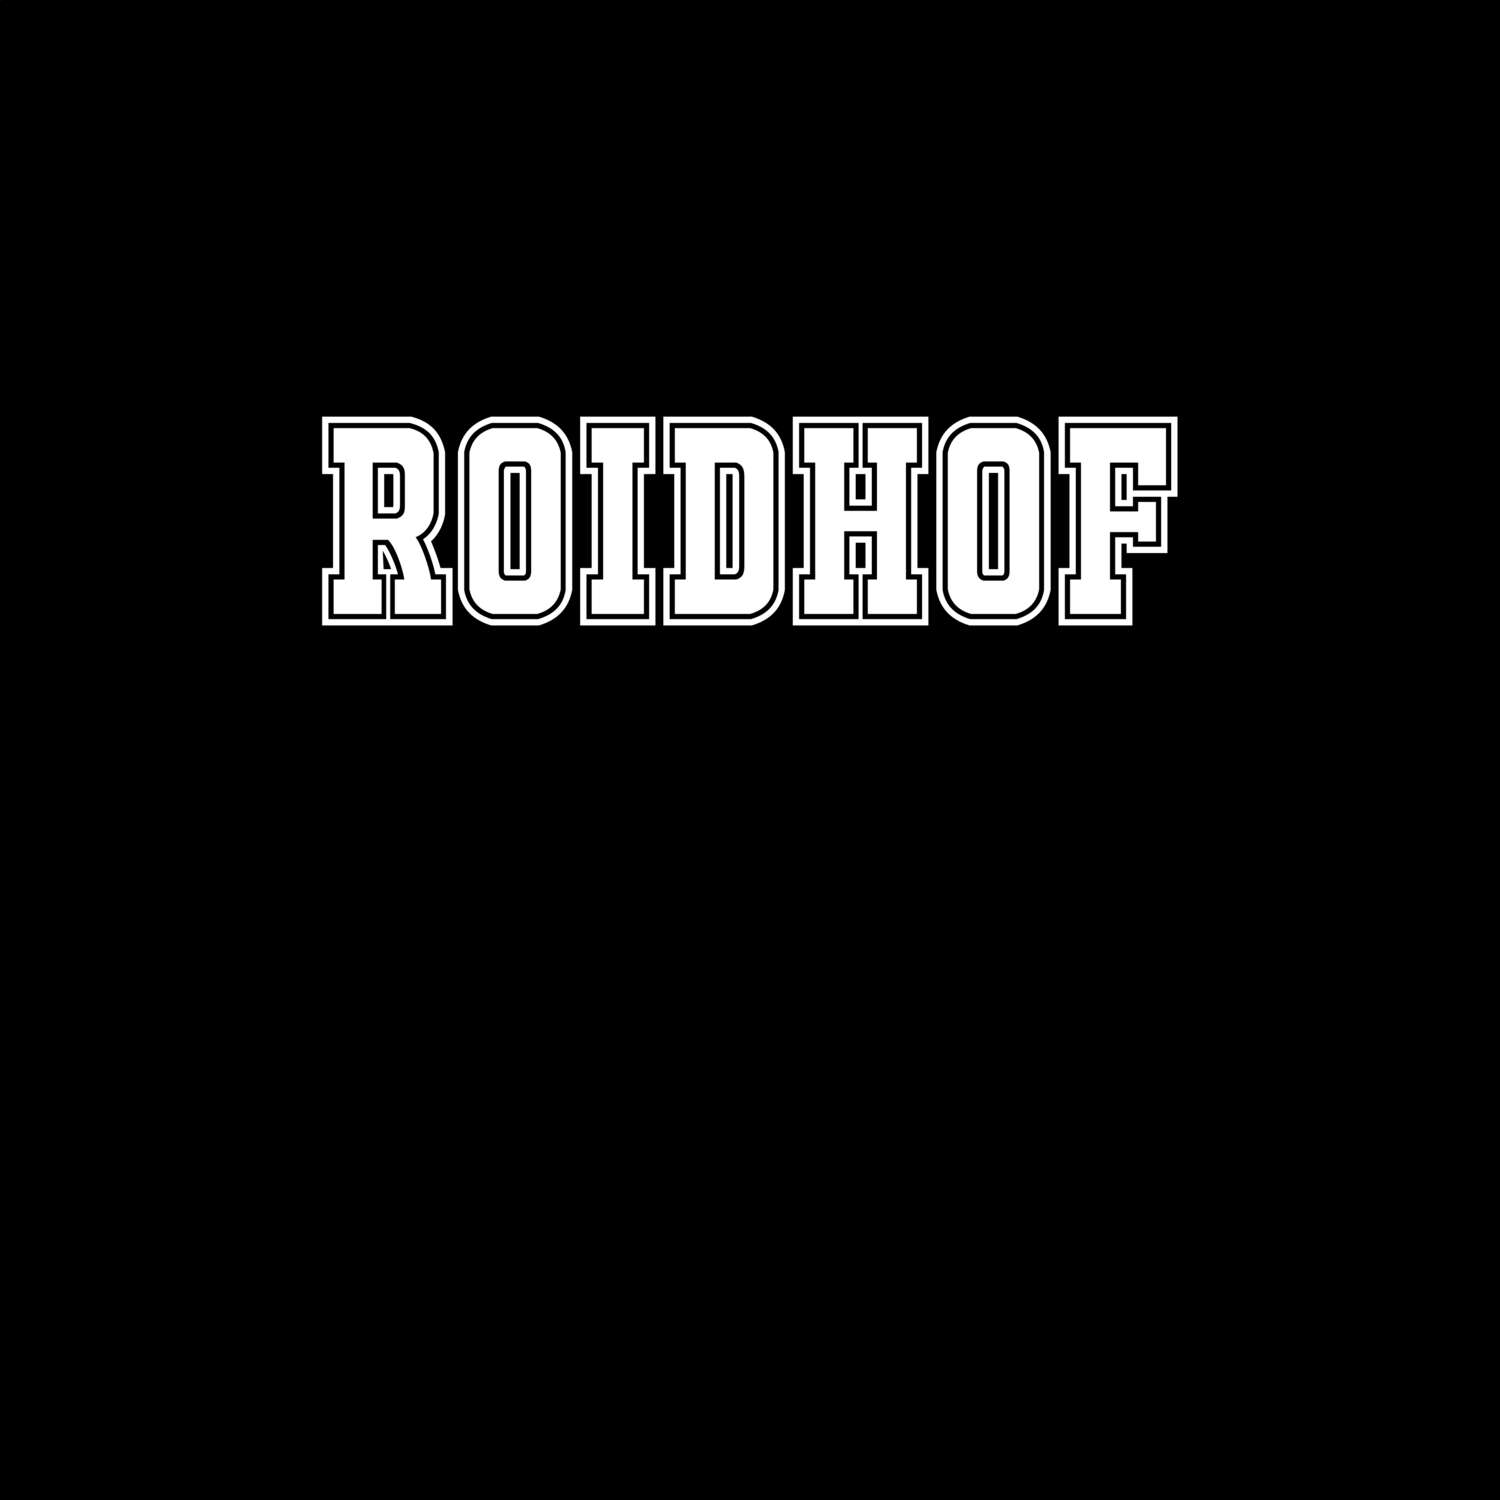 Roidhof T-Shirt »Classic«